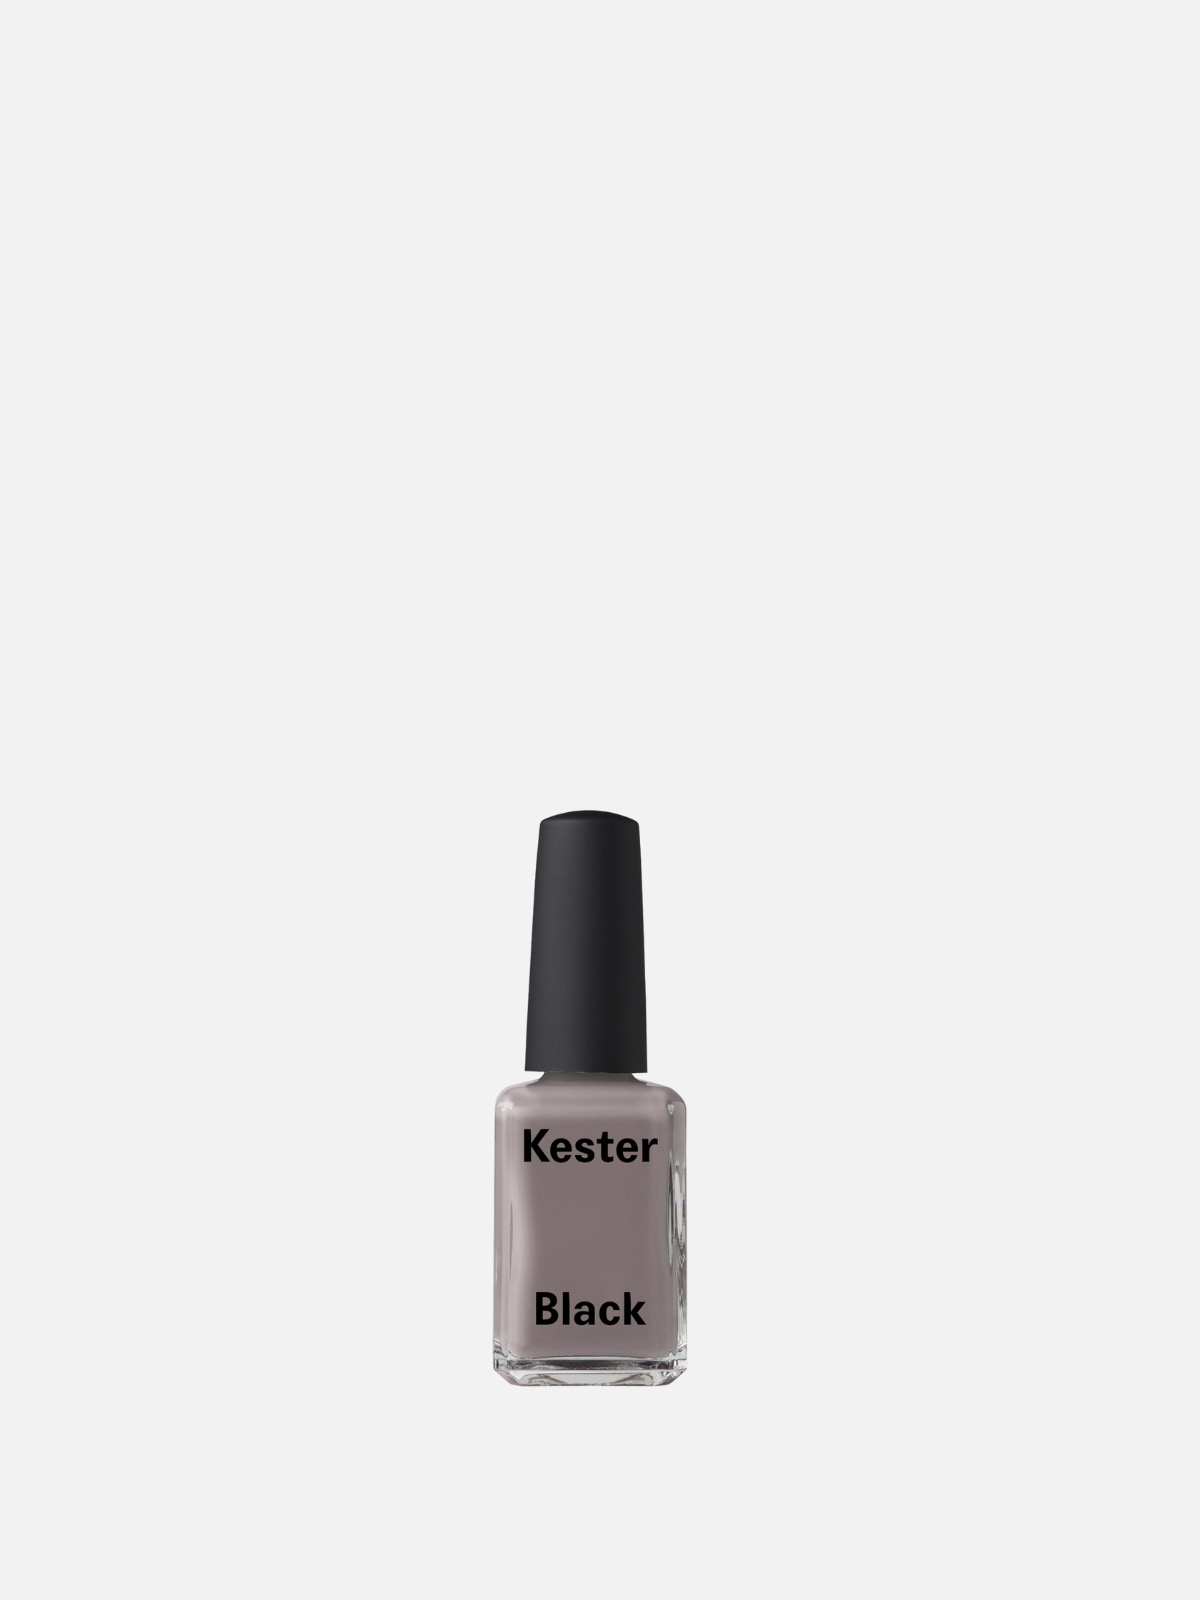 Kester Black - Paris Texas - Smalto color grigio tonalità calda